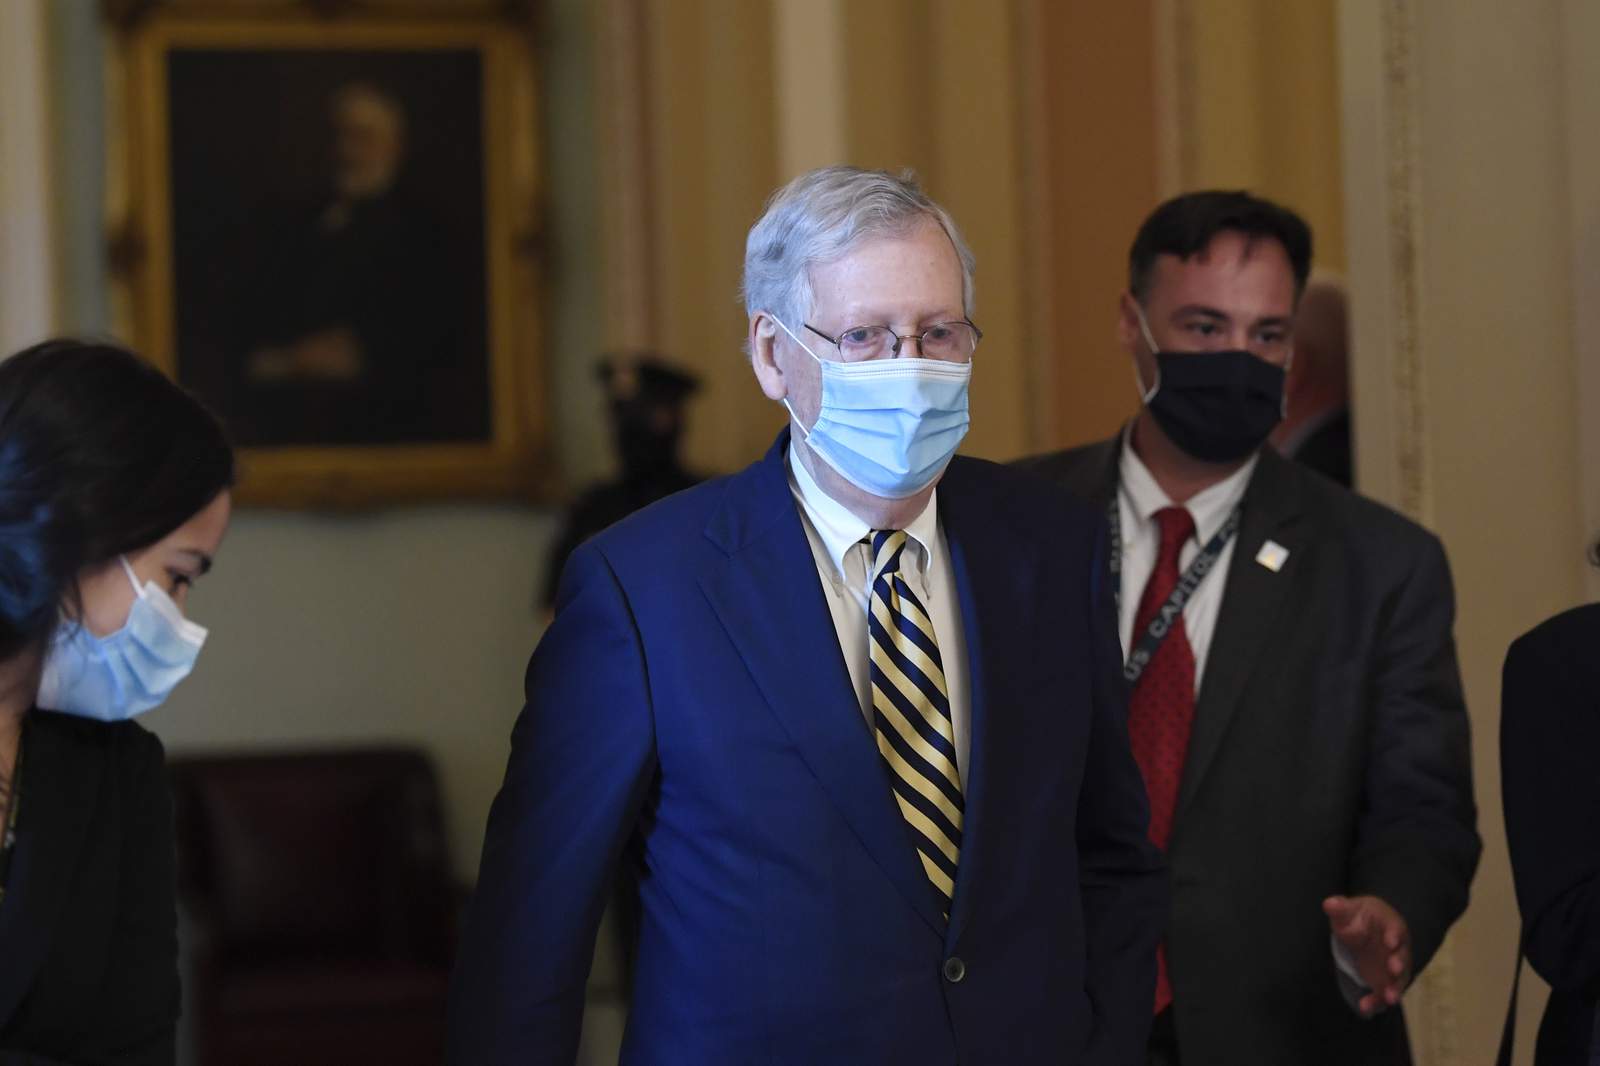 Senate Republicans preparing $500B virus relief proposal